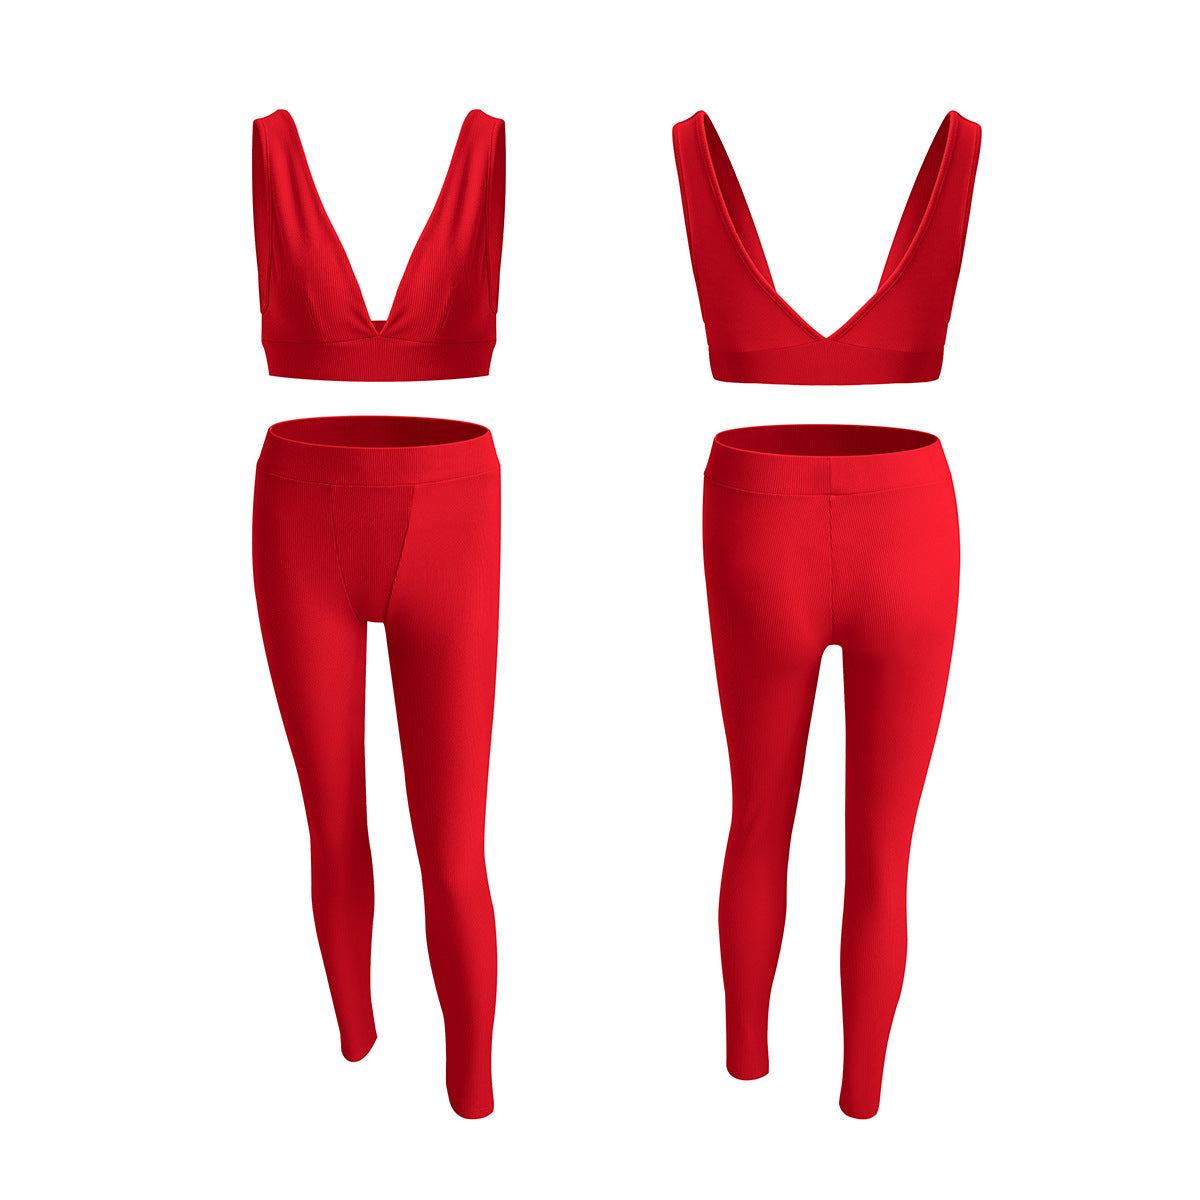 Women's V-neck Sports Yoga Cotton Solid Color Two-piece Set